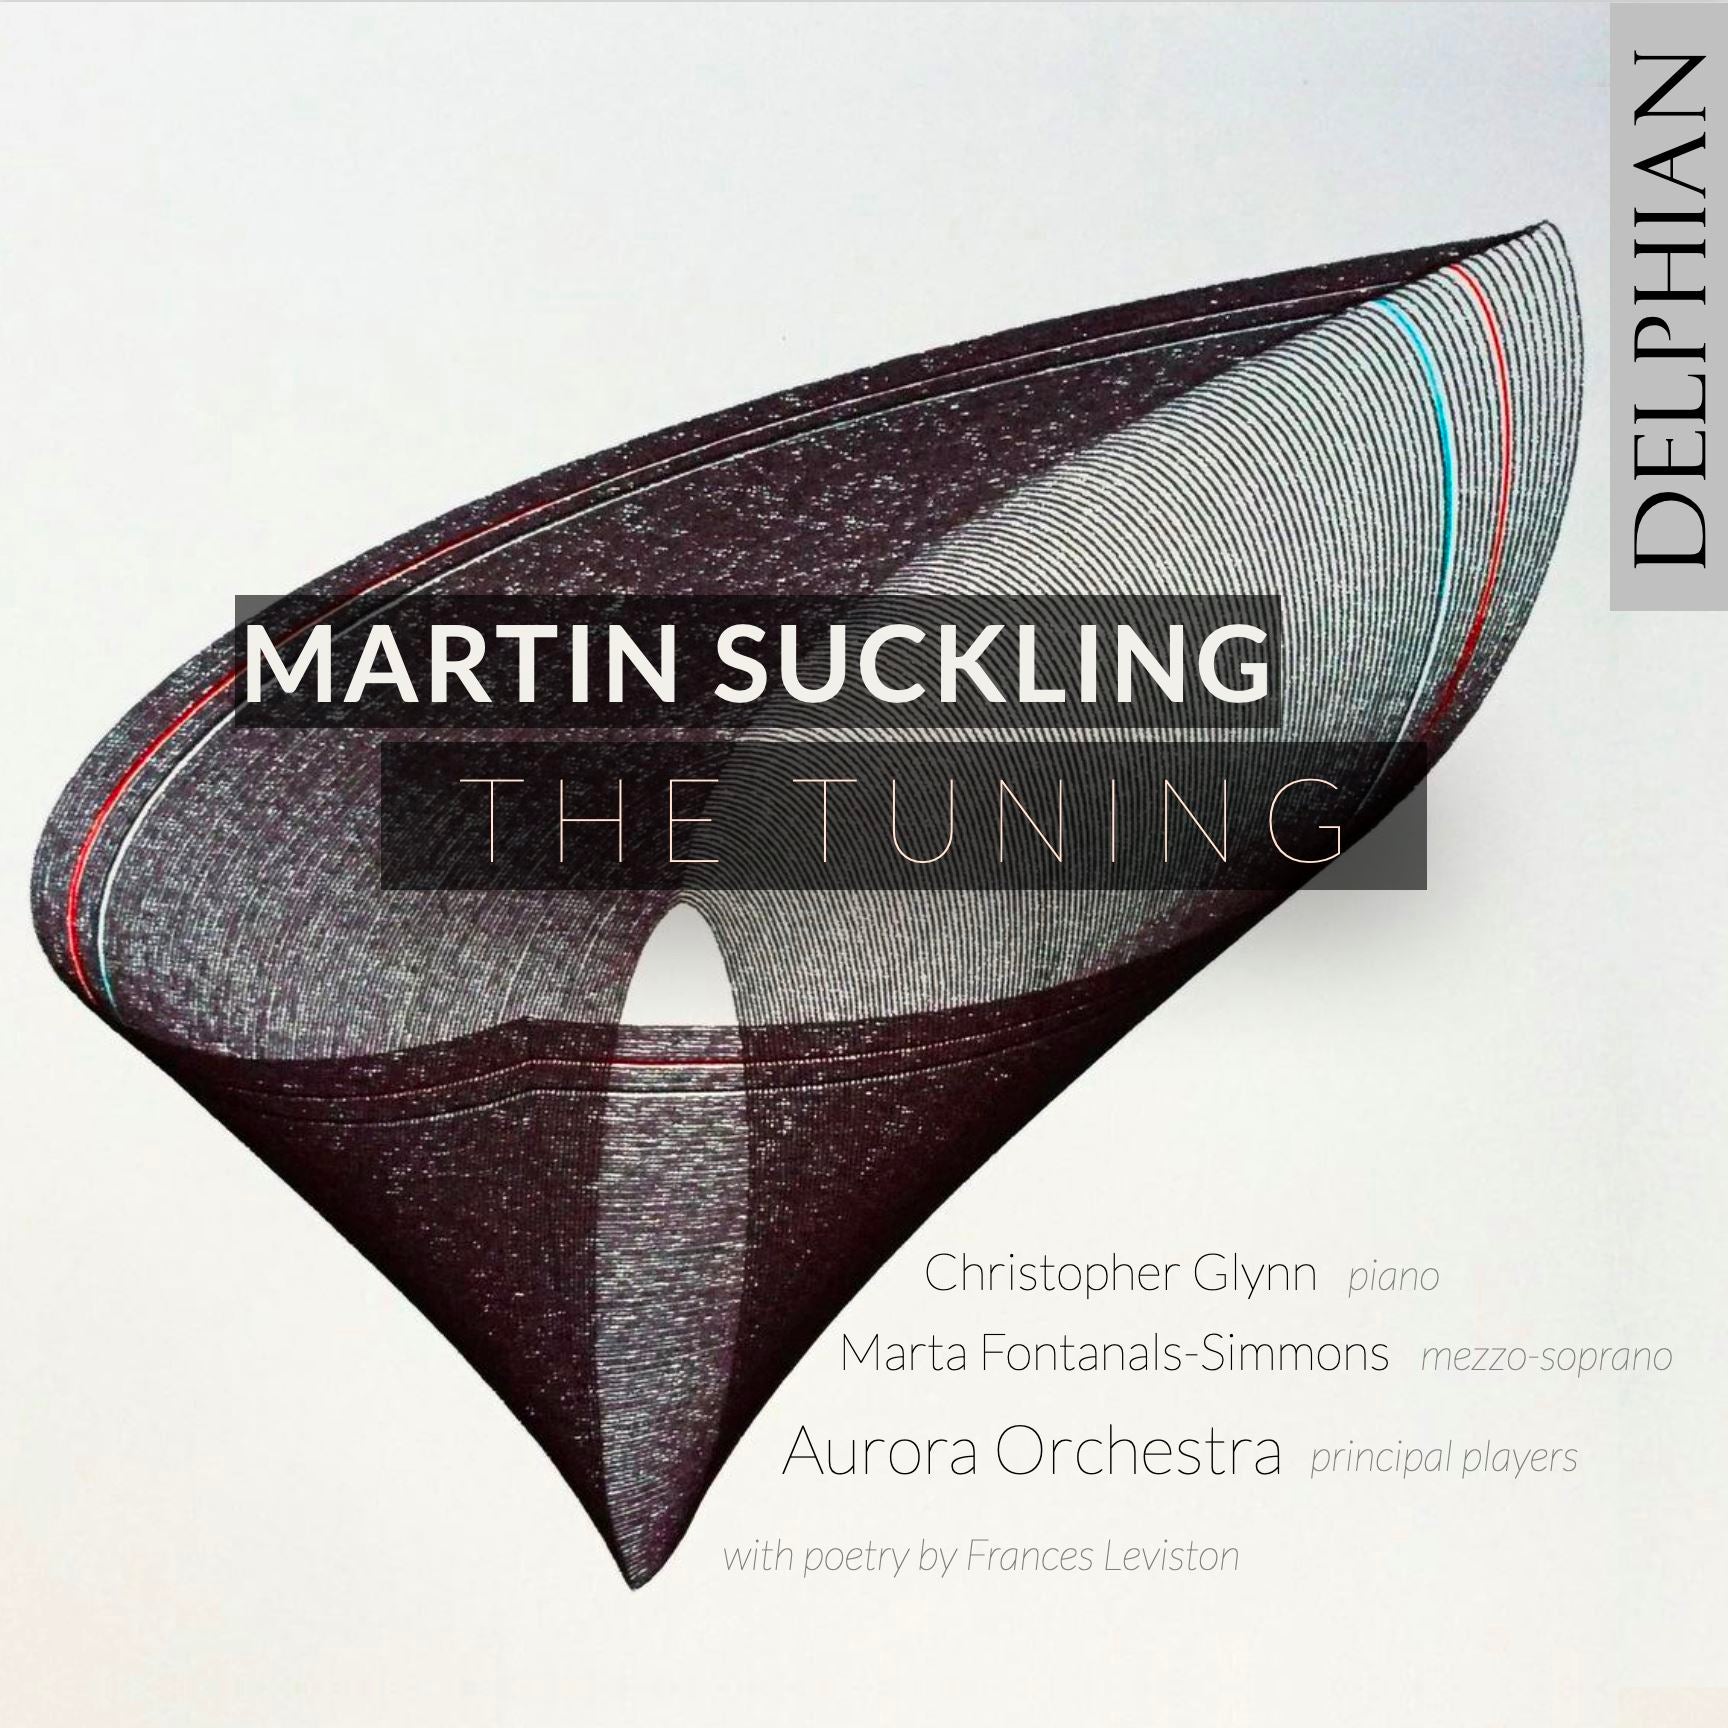 Martin Suckling: The Tuning CD Delphian Records